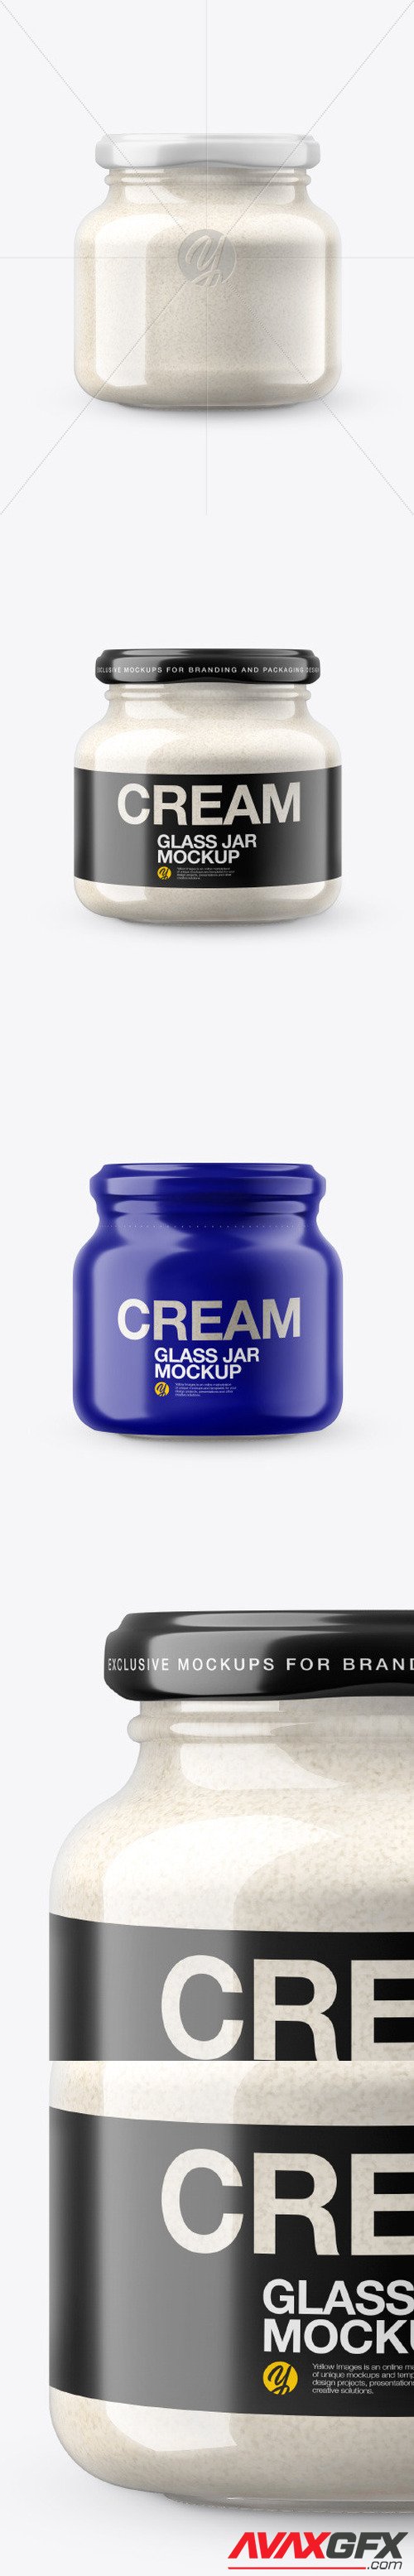 Glass Jar w/h Cashew Cream in Shrink Sleeve Mockup 50614 [TIF]